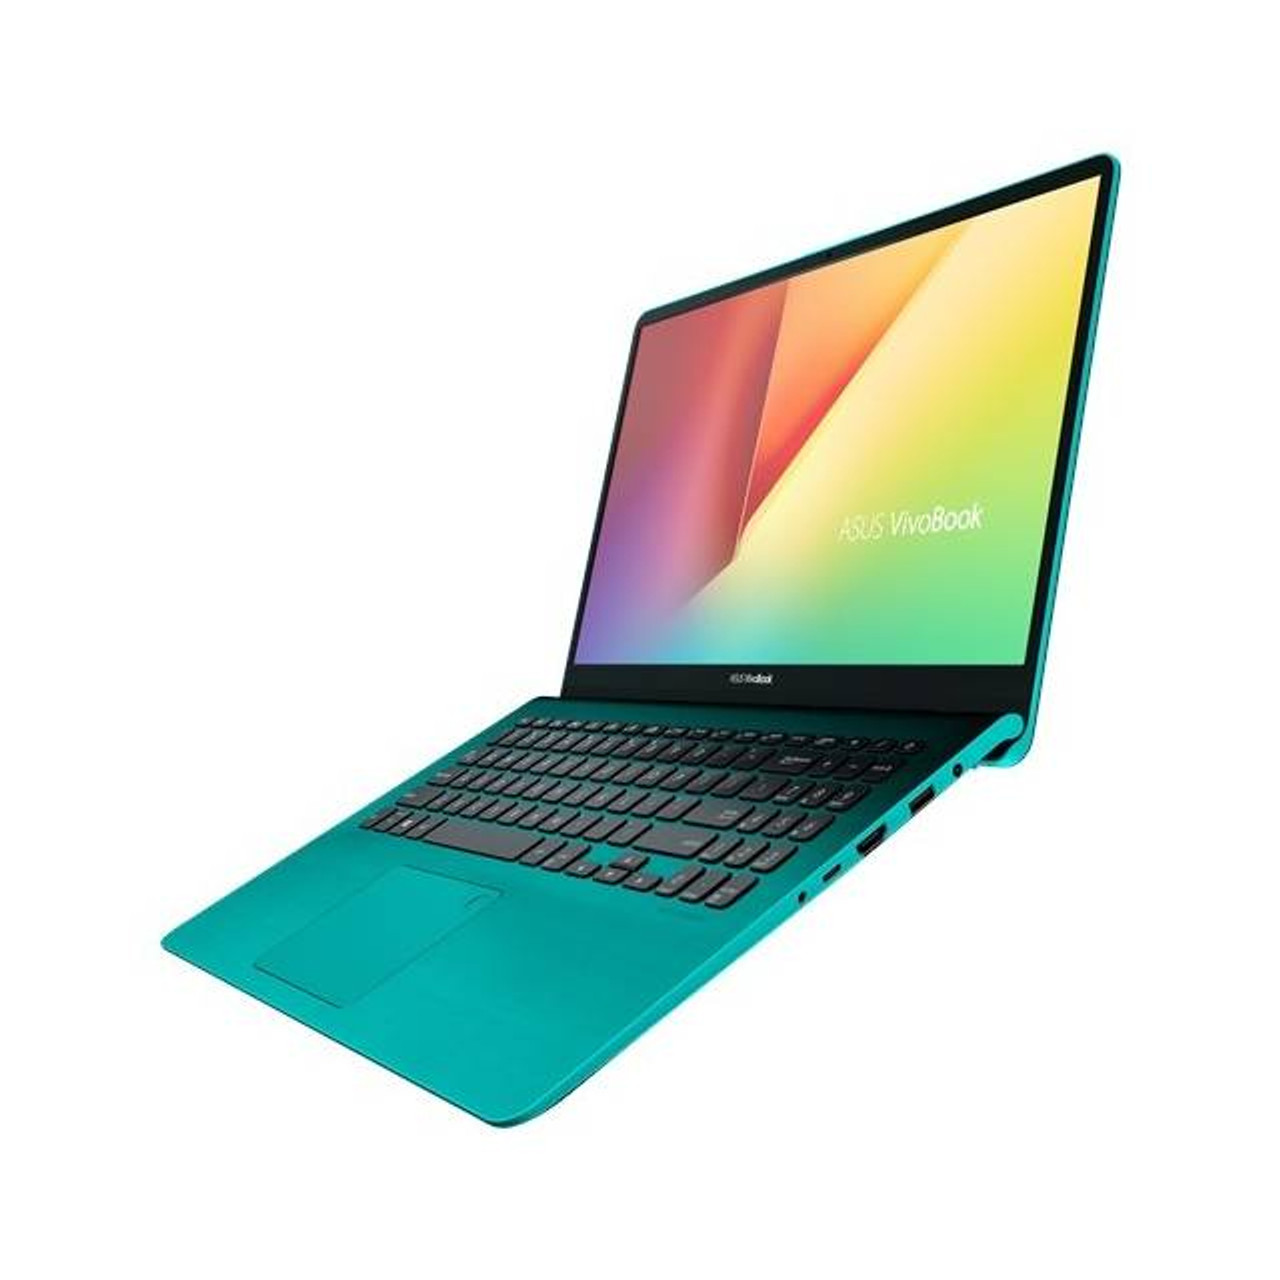 Asus VivoBook S15 S530UA-DB51-GN 15.6 inch Intel Core i5-8250U 1.6GHz/ 8GB DDR4 / 256GB SDD/ USB3.1/